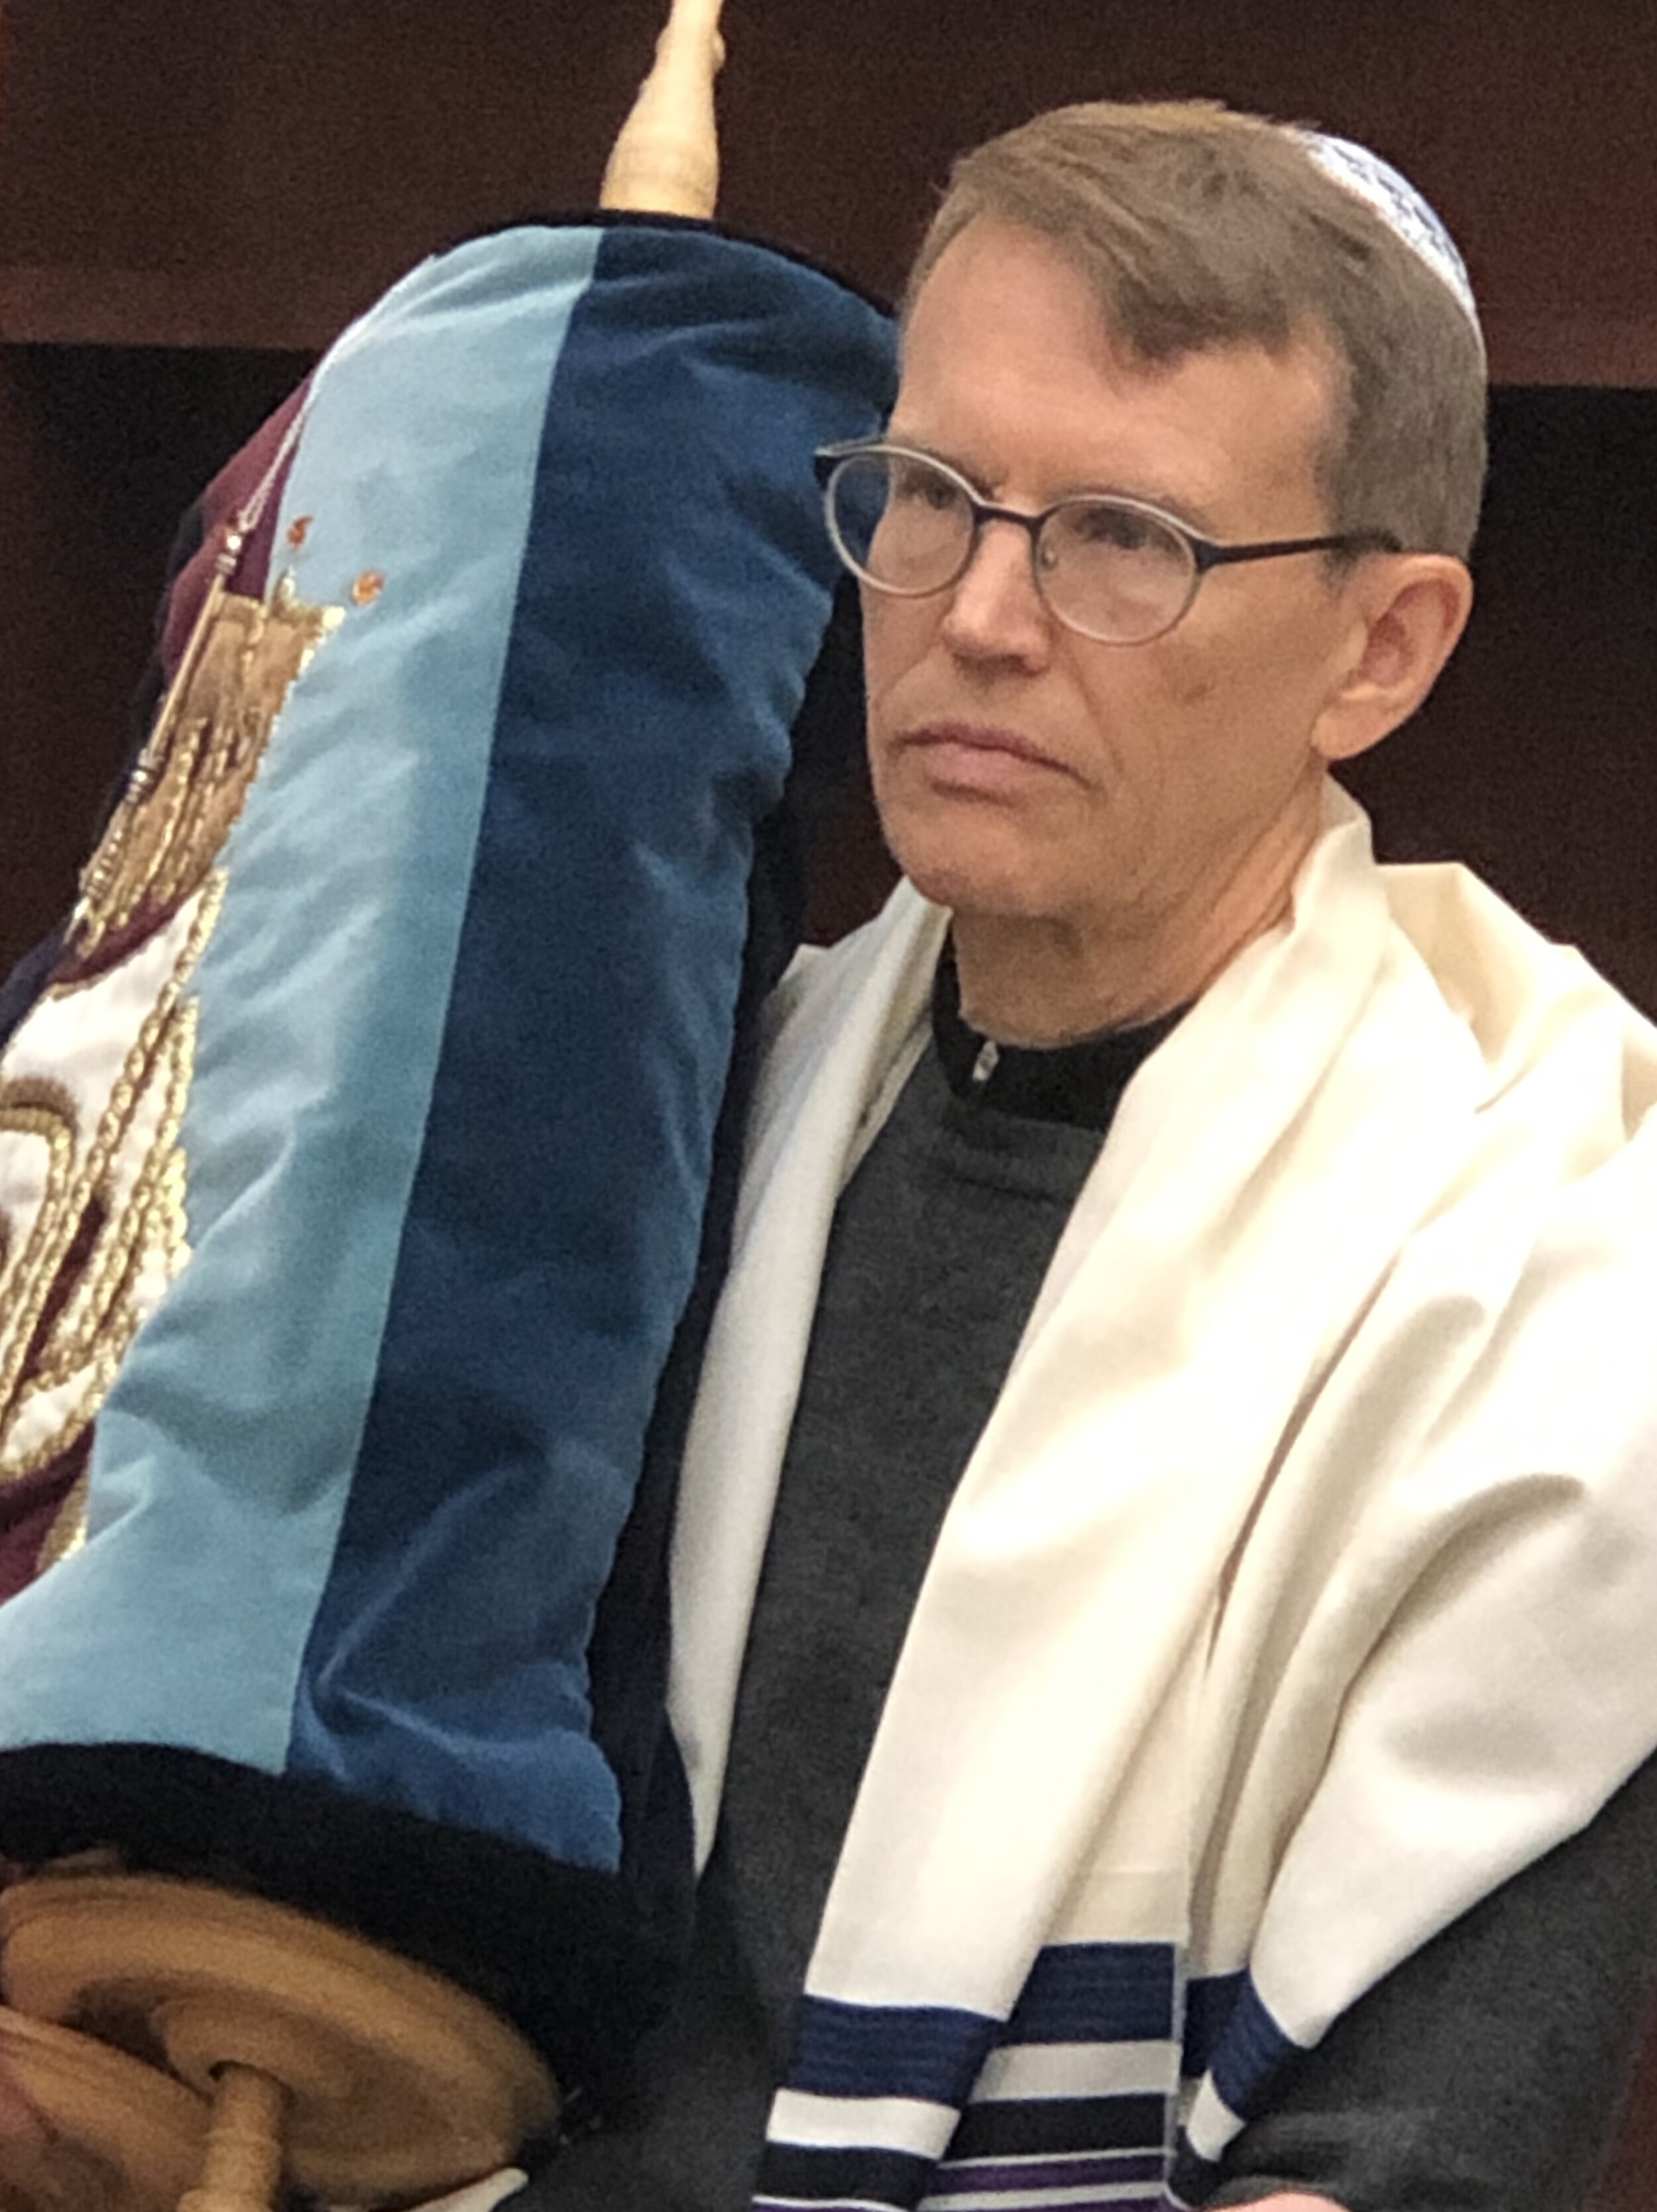 Stan Vriezelaar carrying Torah.jpg